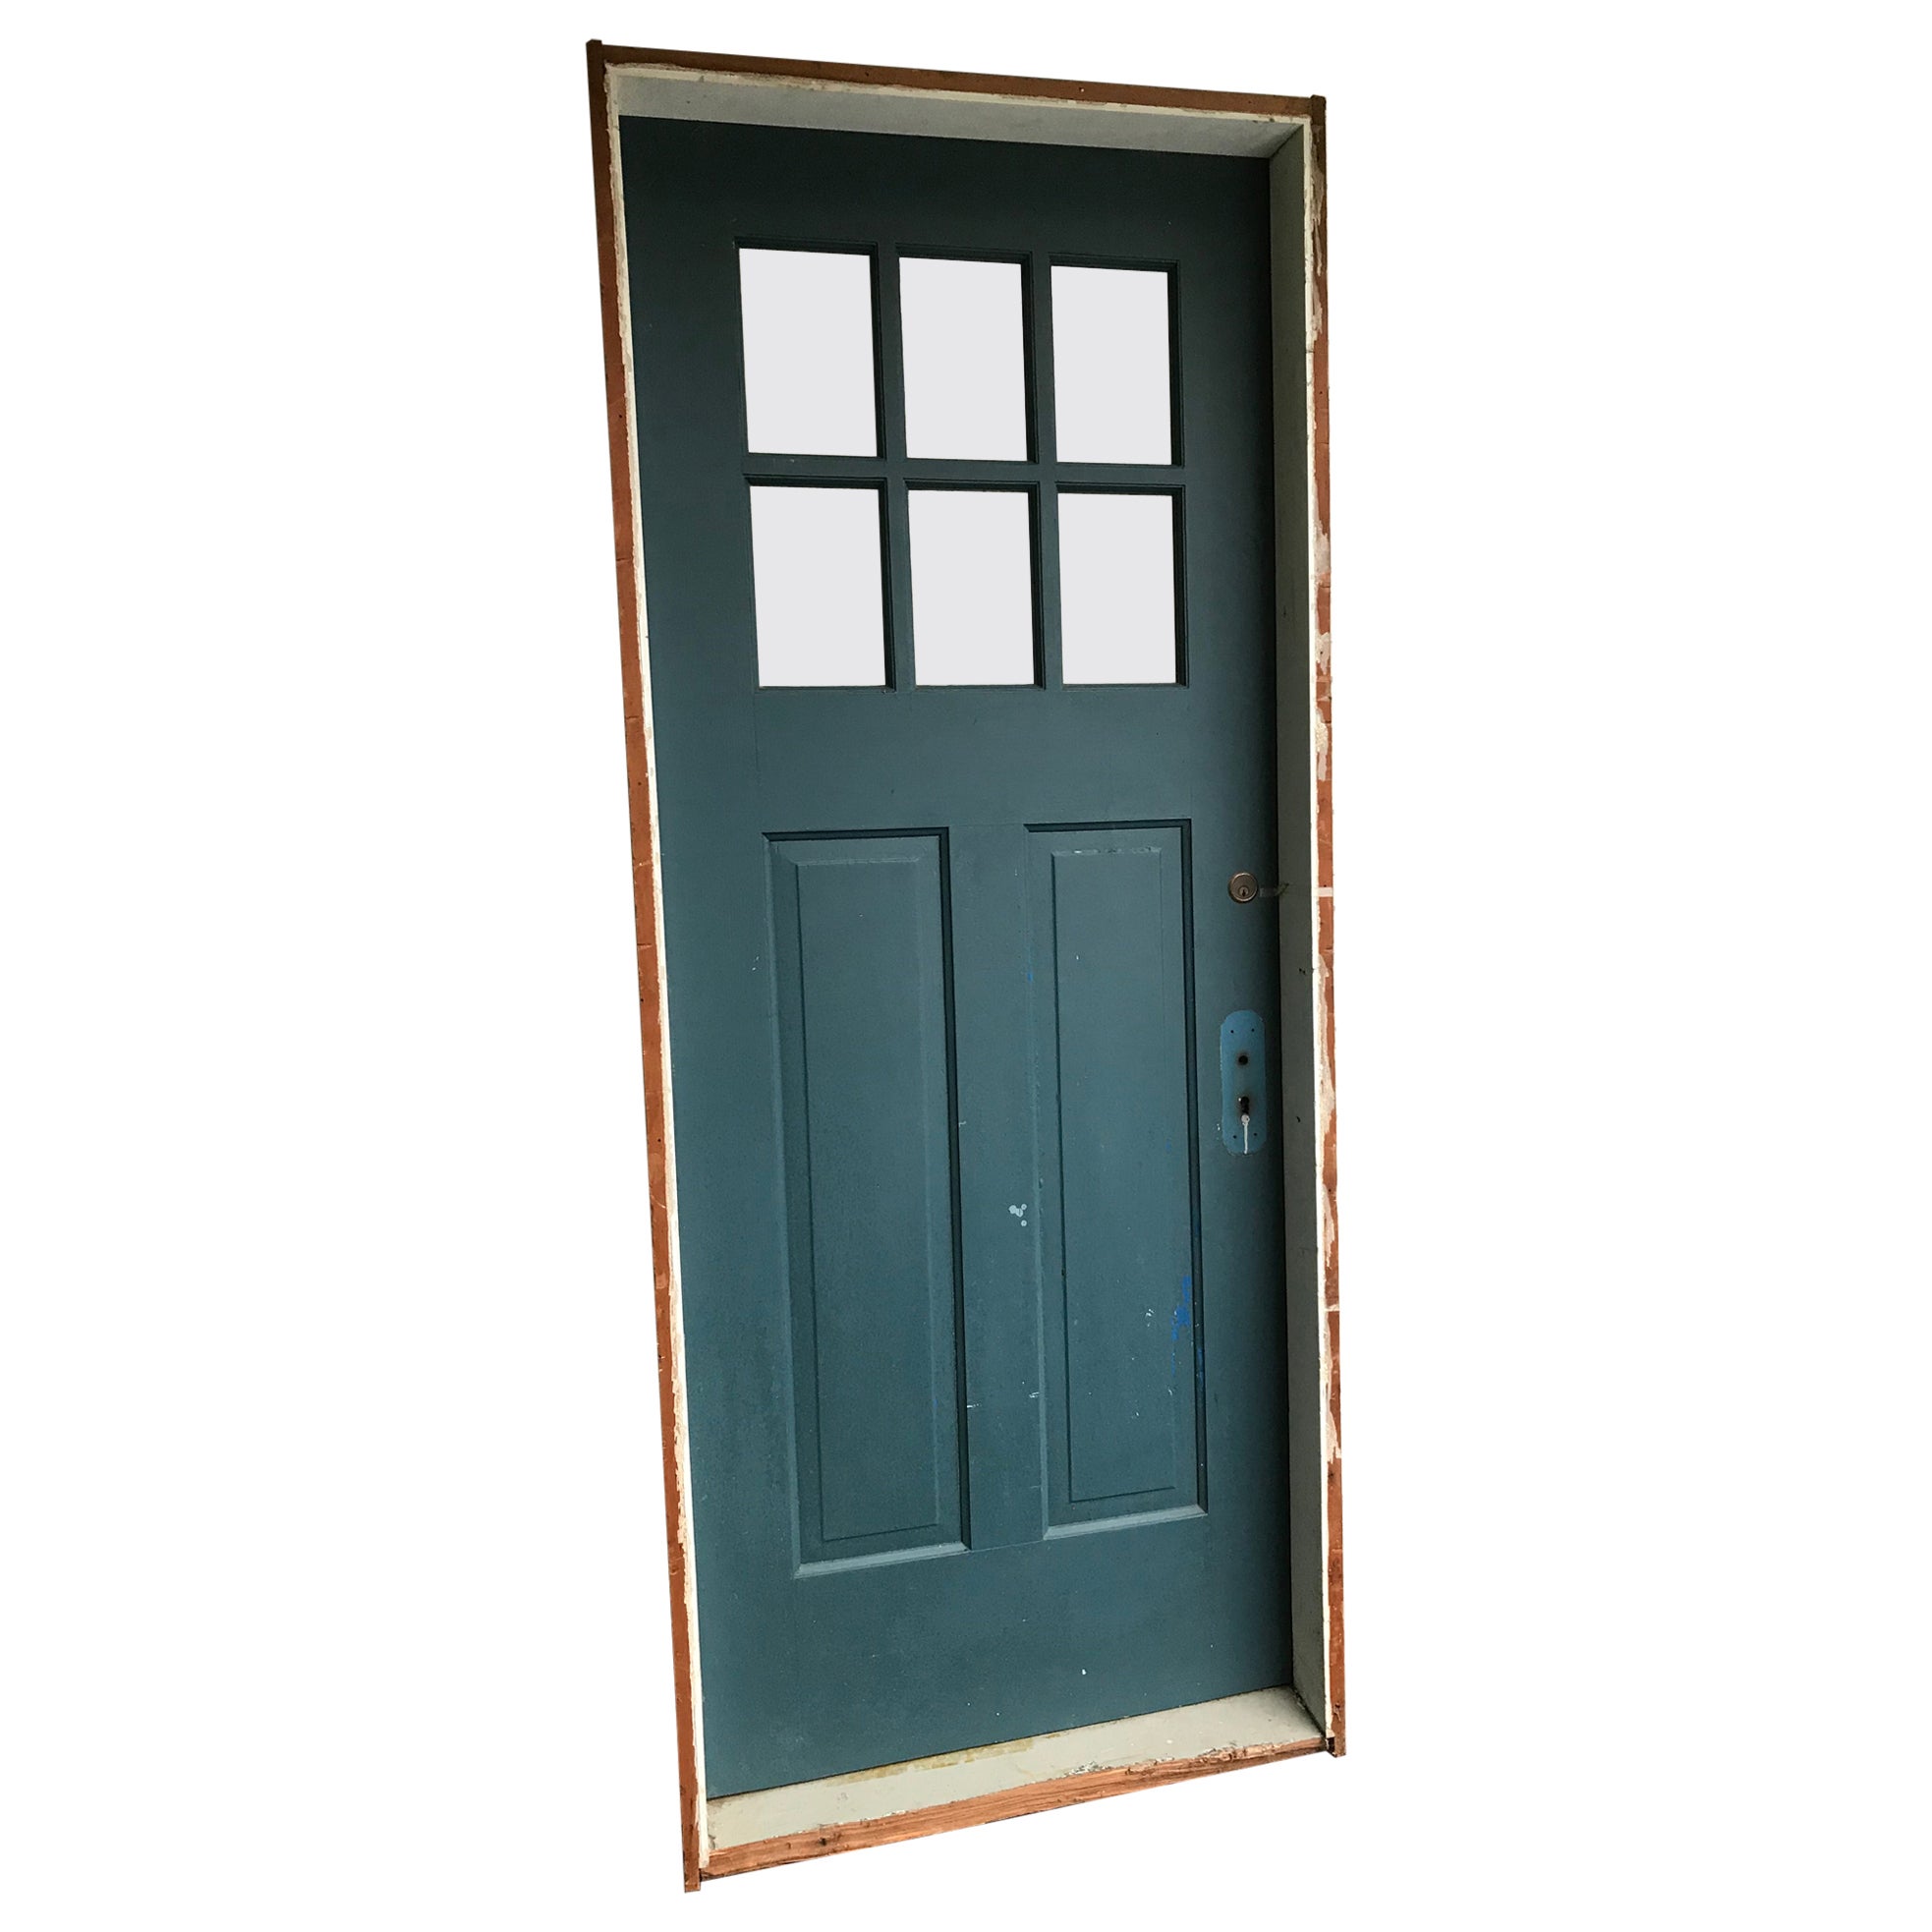 Large Arts & Crafts Craftsman Solid Wood Framed Door with Window & Hardware